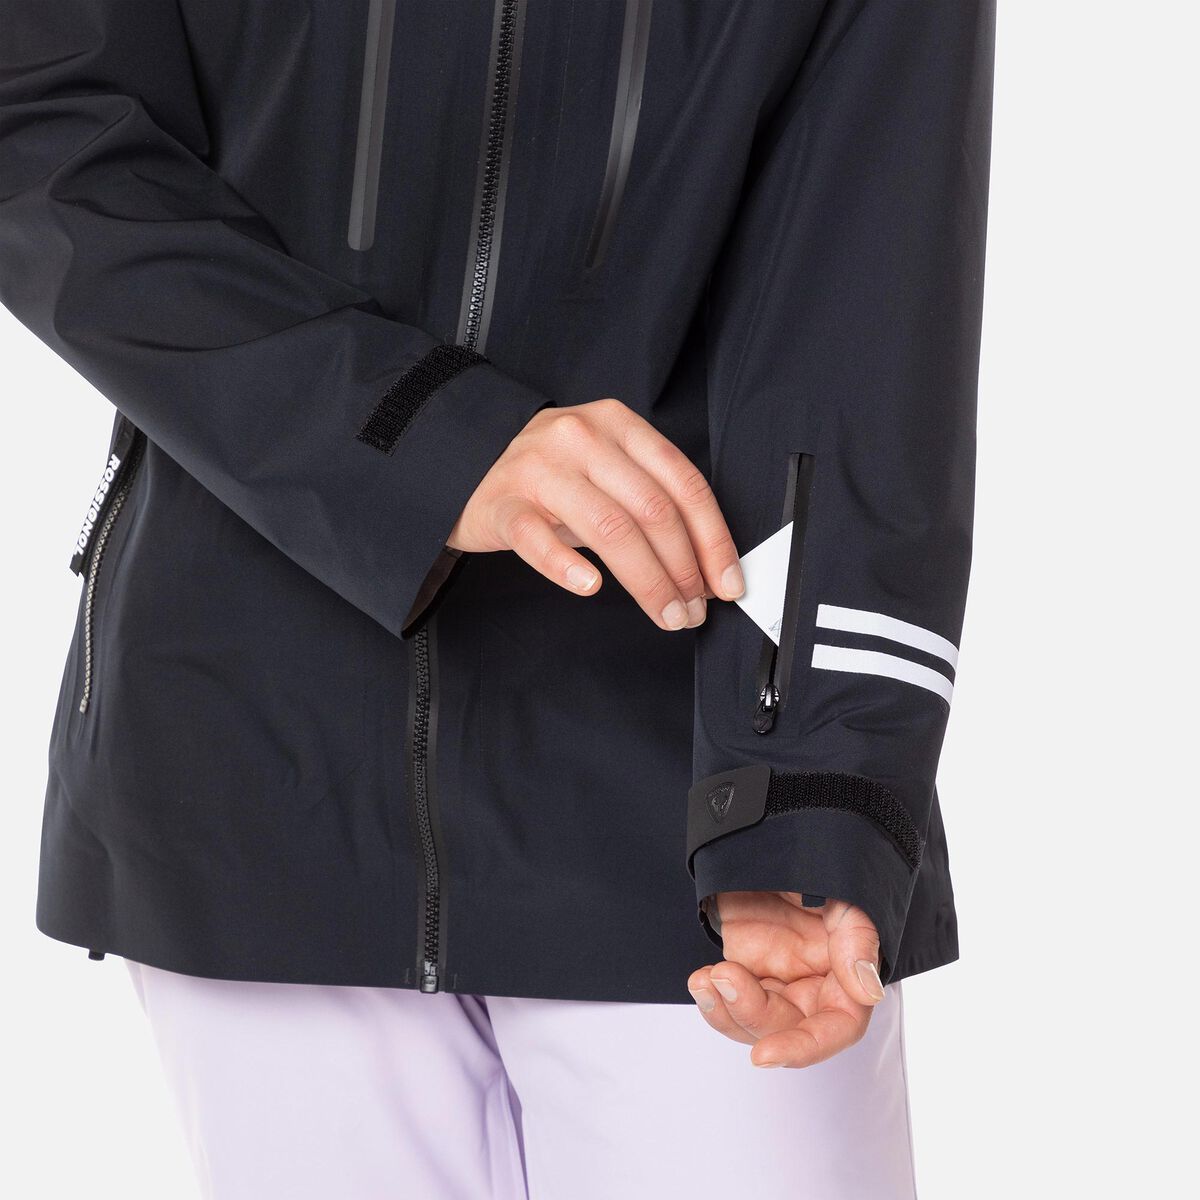 Rossignol Women's Atelier S Ski Jacket black